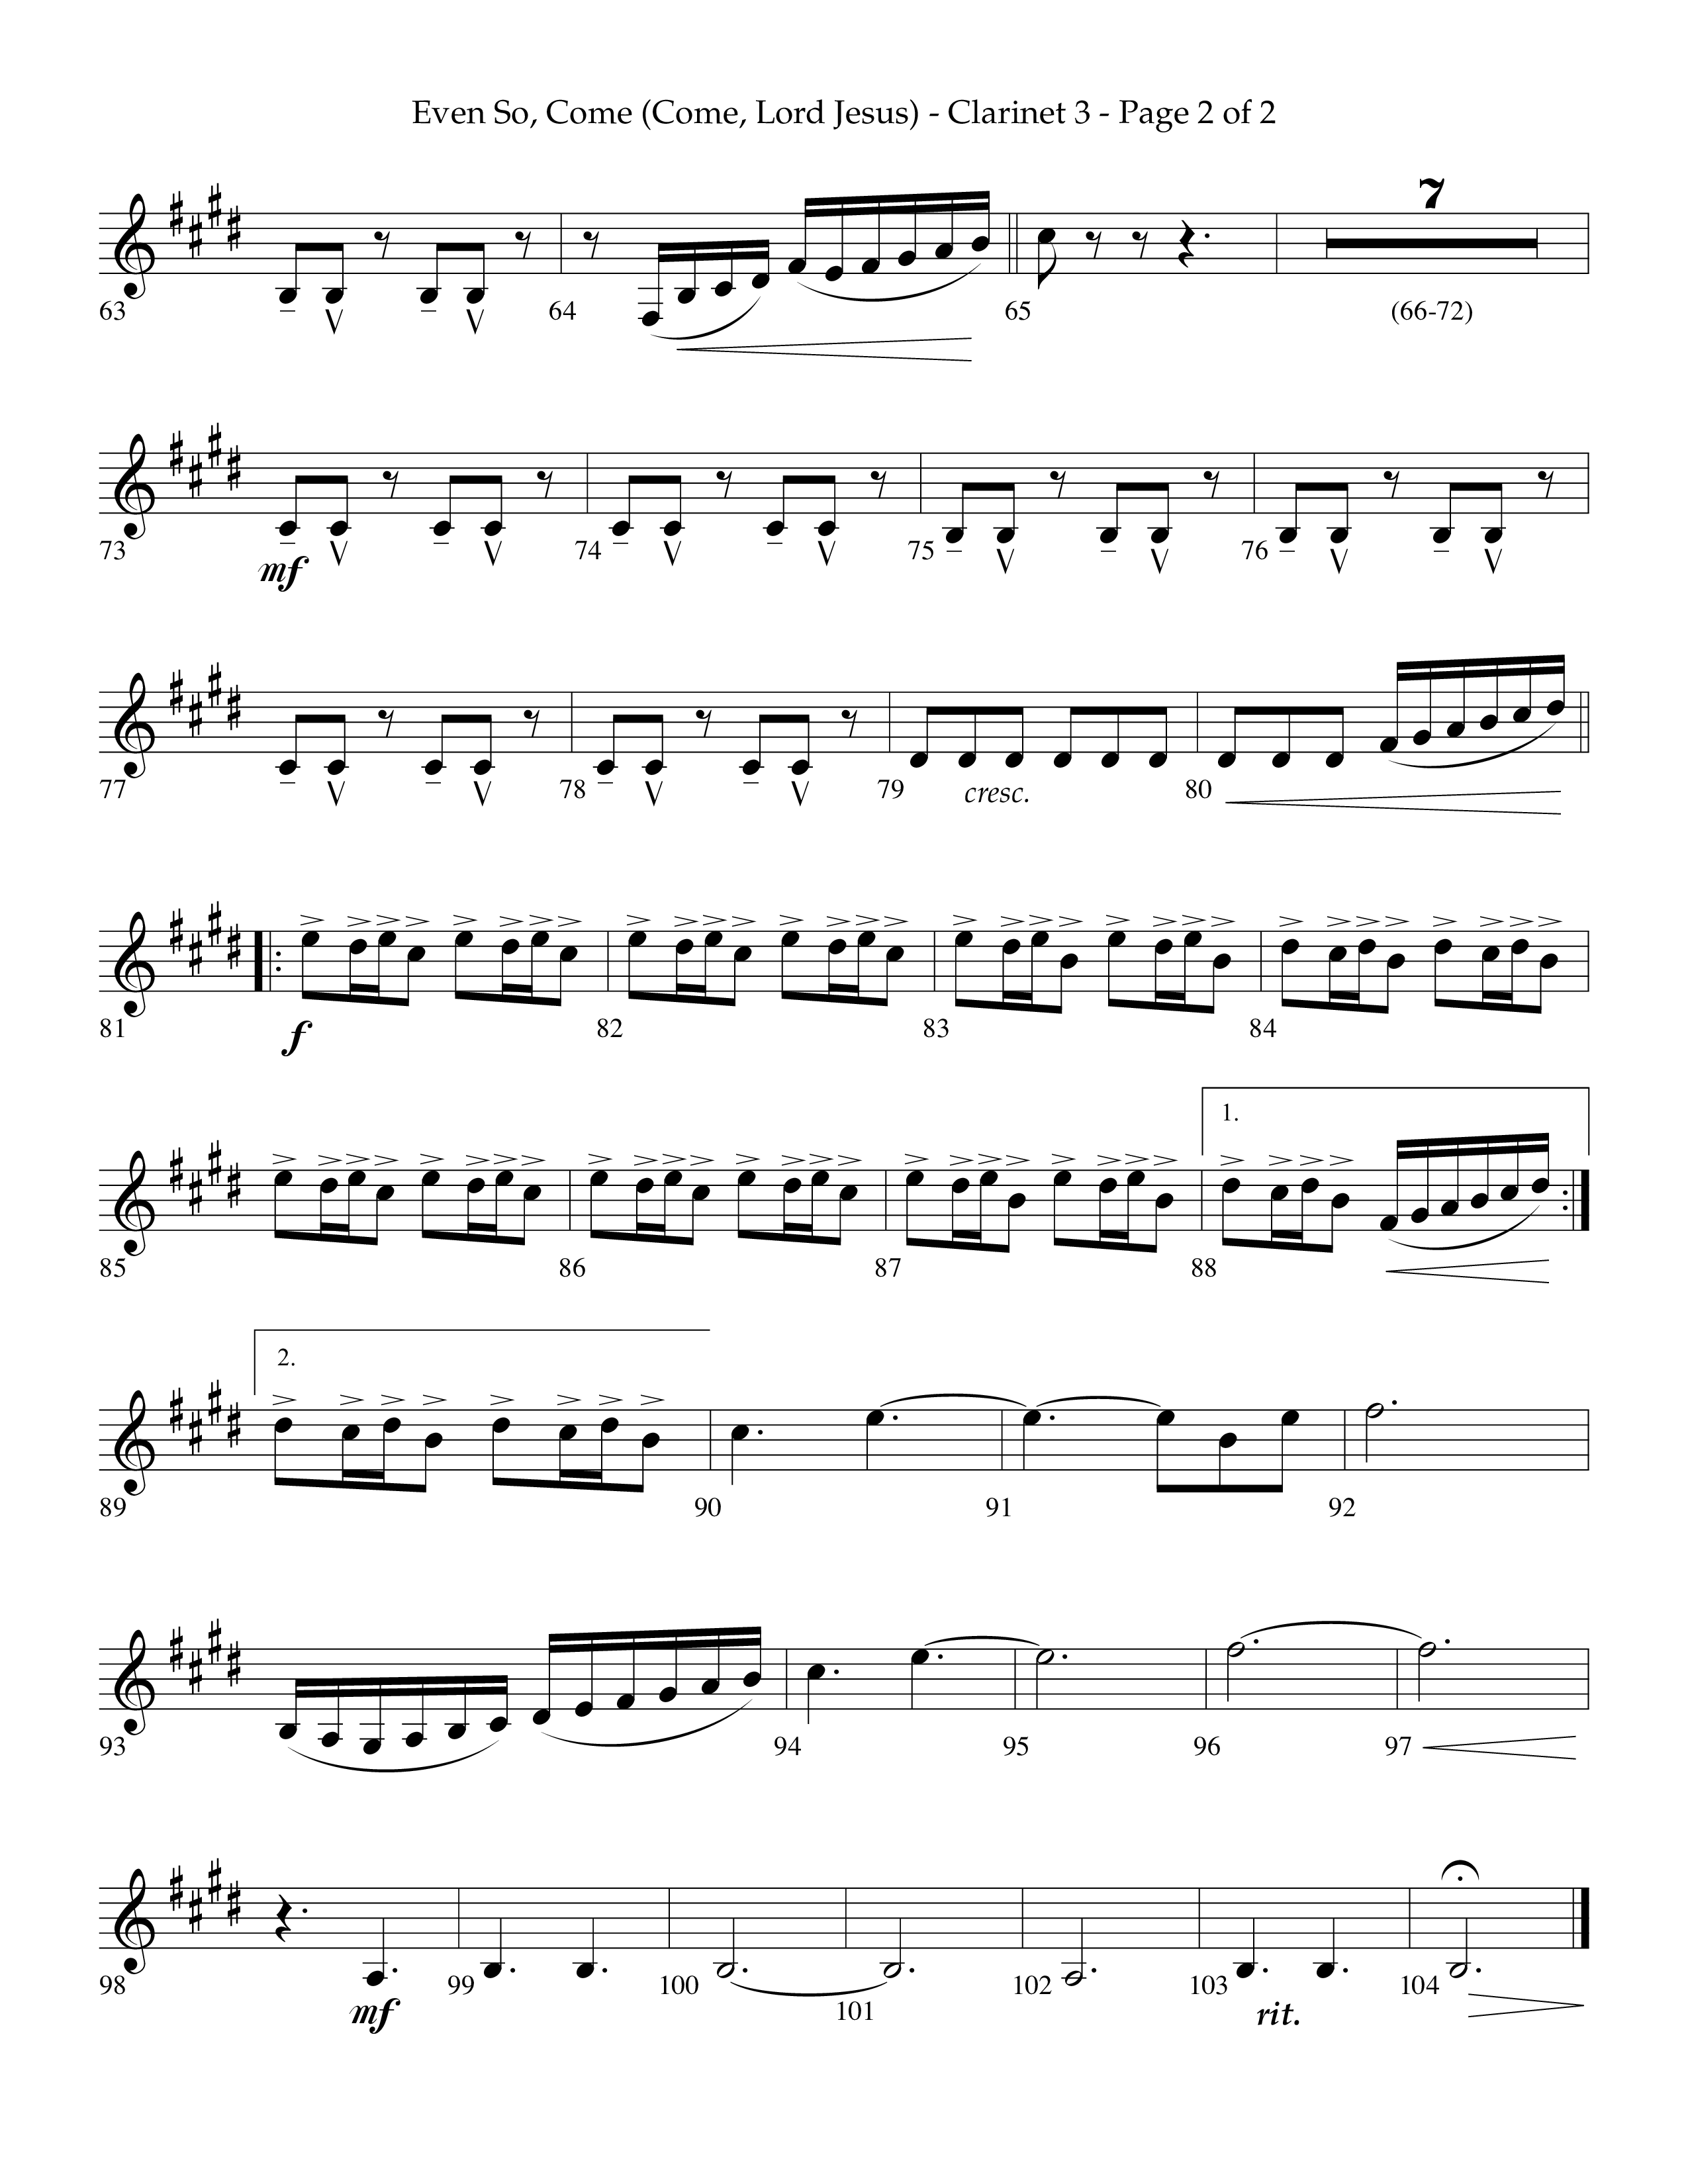 Even So Come (Choral Anthem SATB) Clarinet 3 (Lifeway Choral / Arr. Camp Kirkland)